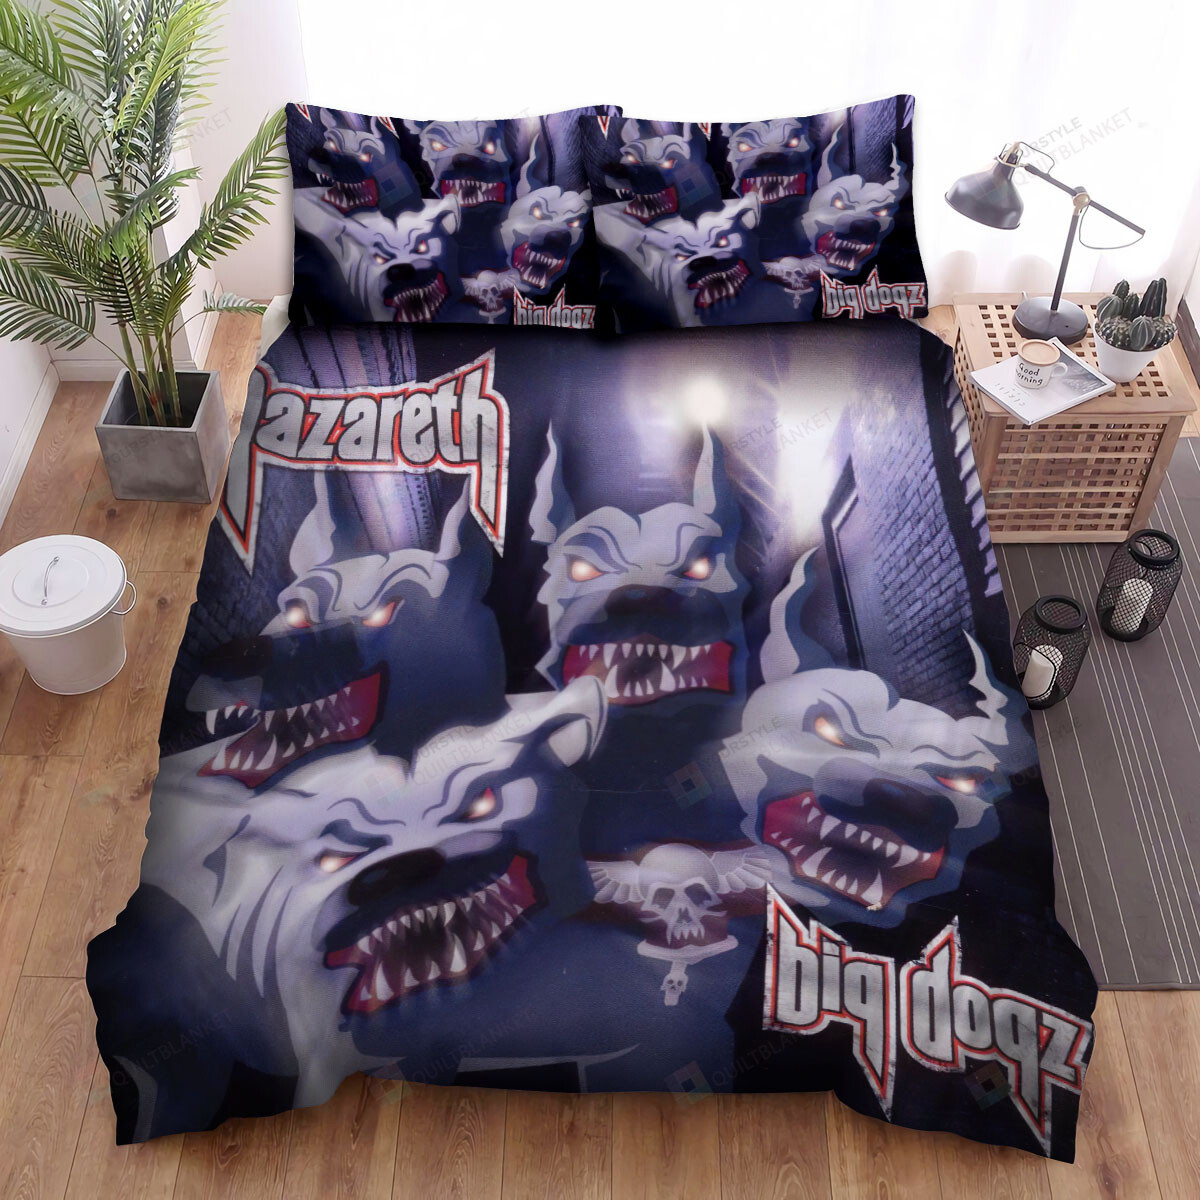 Nazareth Big Dogz Album Cover Bed Sheets Spread Comforter Duvet Cover Bedding Sets